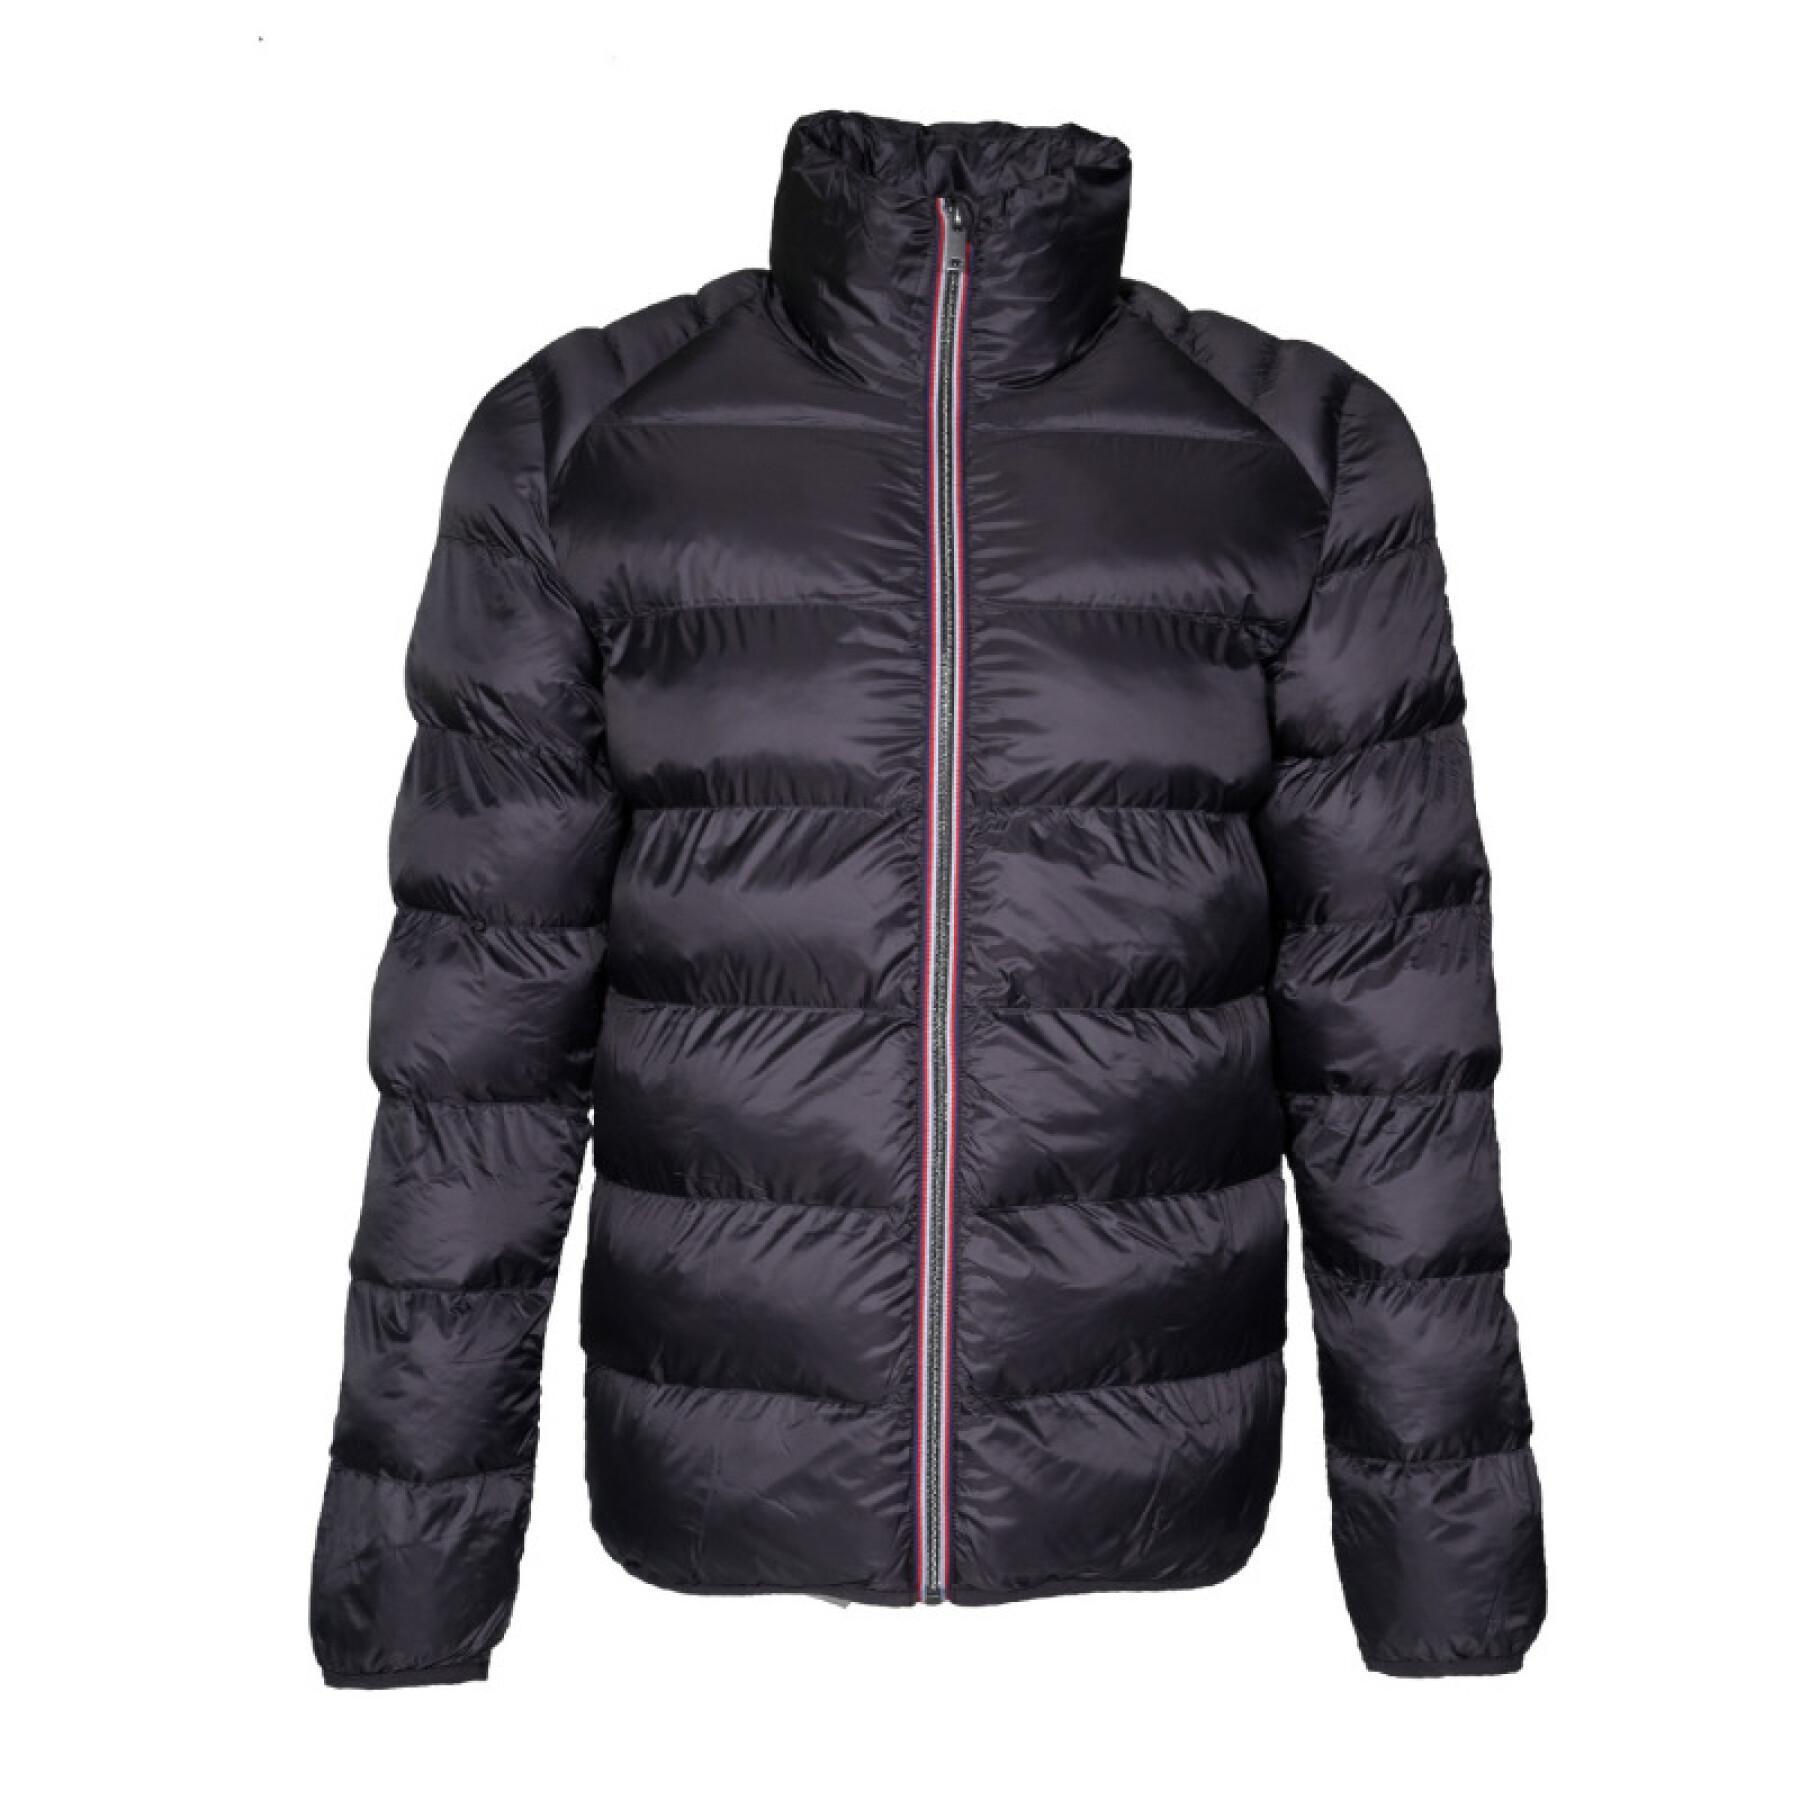 Down jacket Lhotse Yakov - Down jackets - Men's clothing - Winter Sports